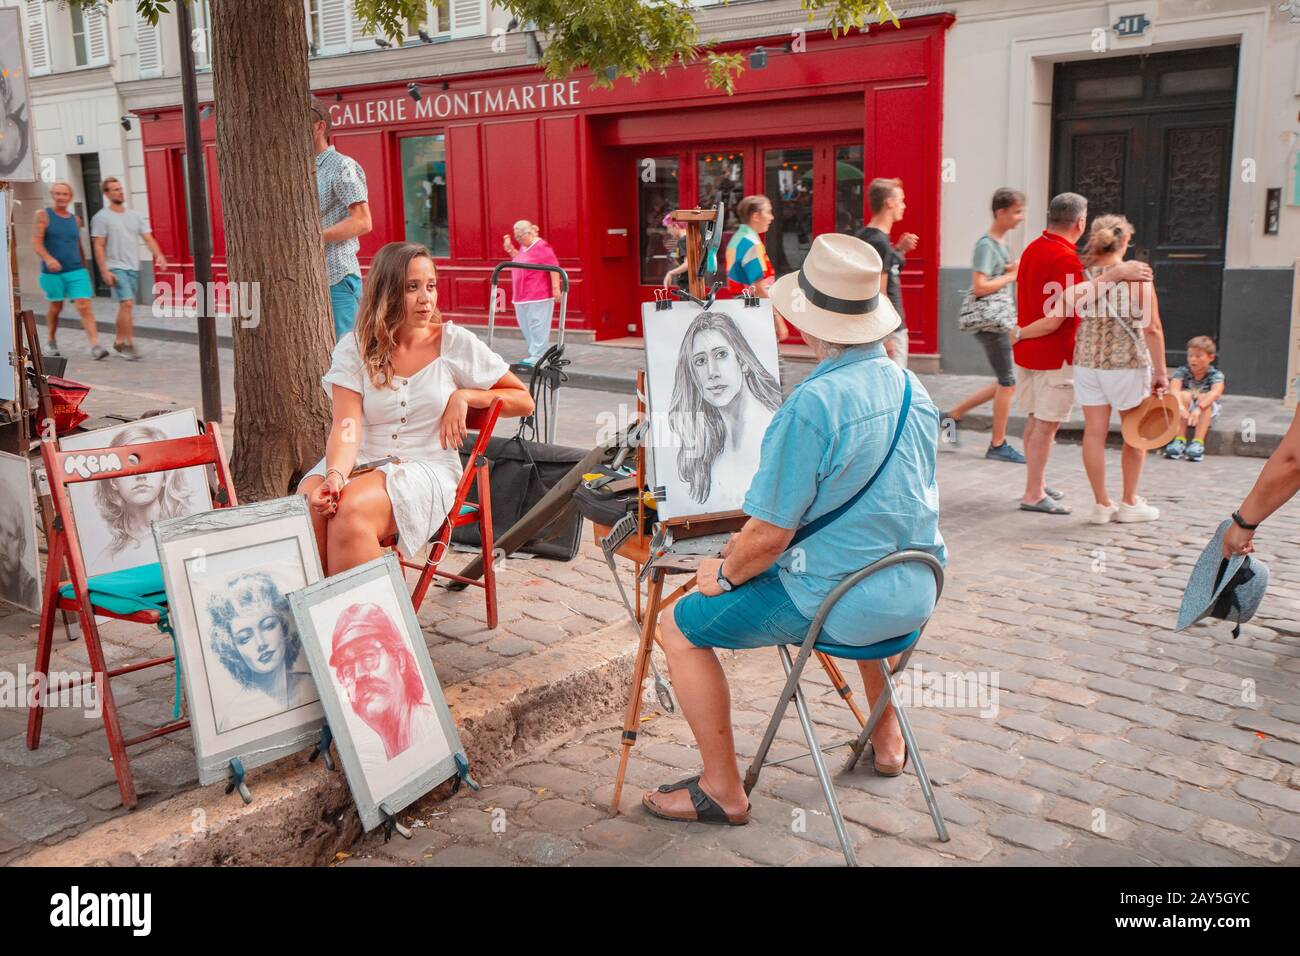 25 July 2019, Paris, France: Street artist painting girl portrait at the Montmartre street Stock Photo